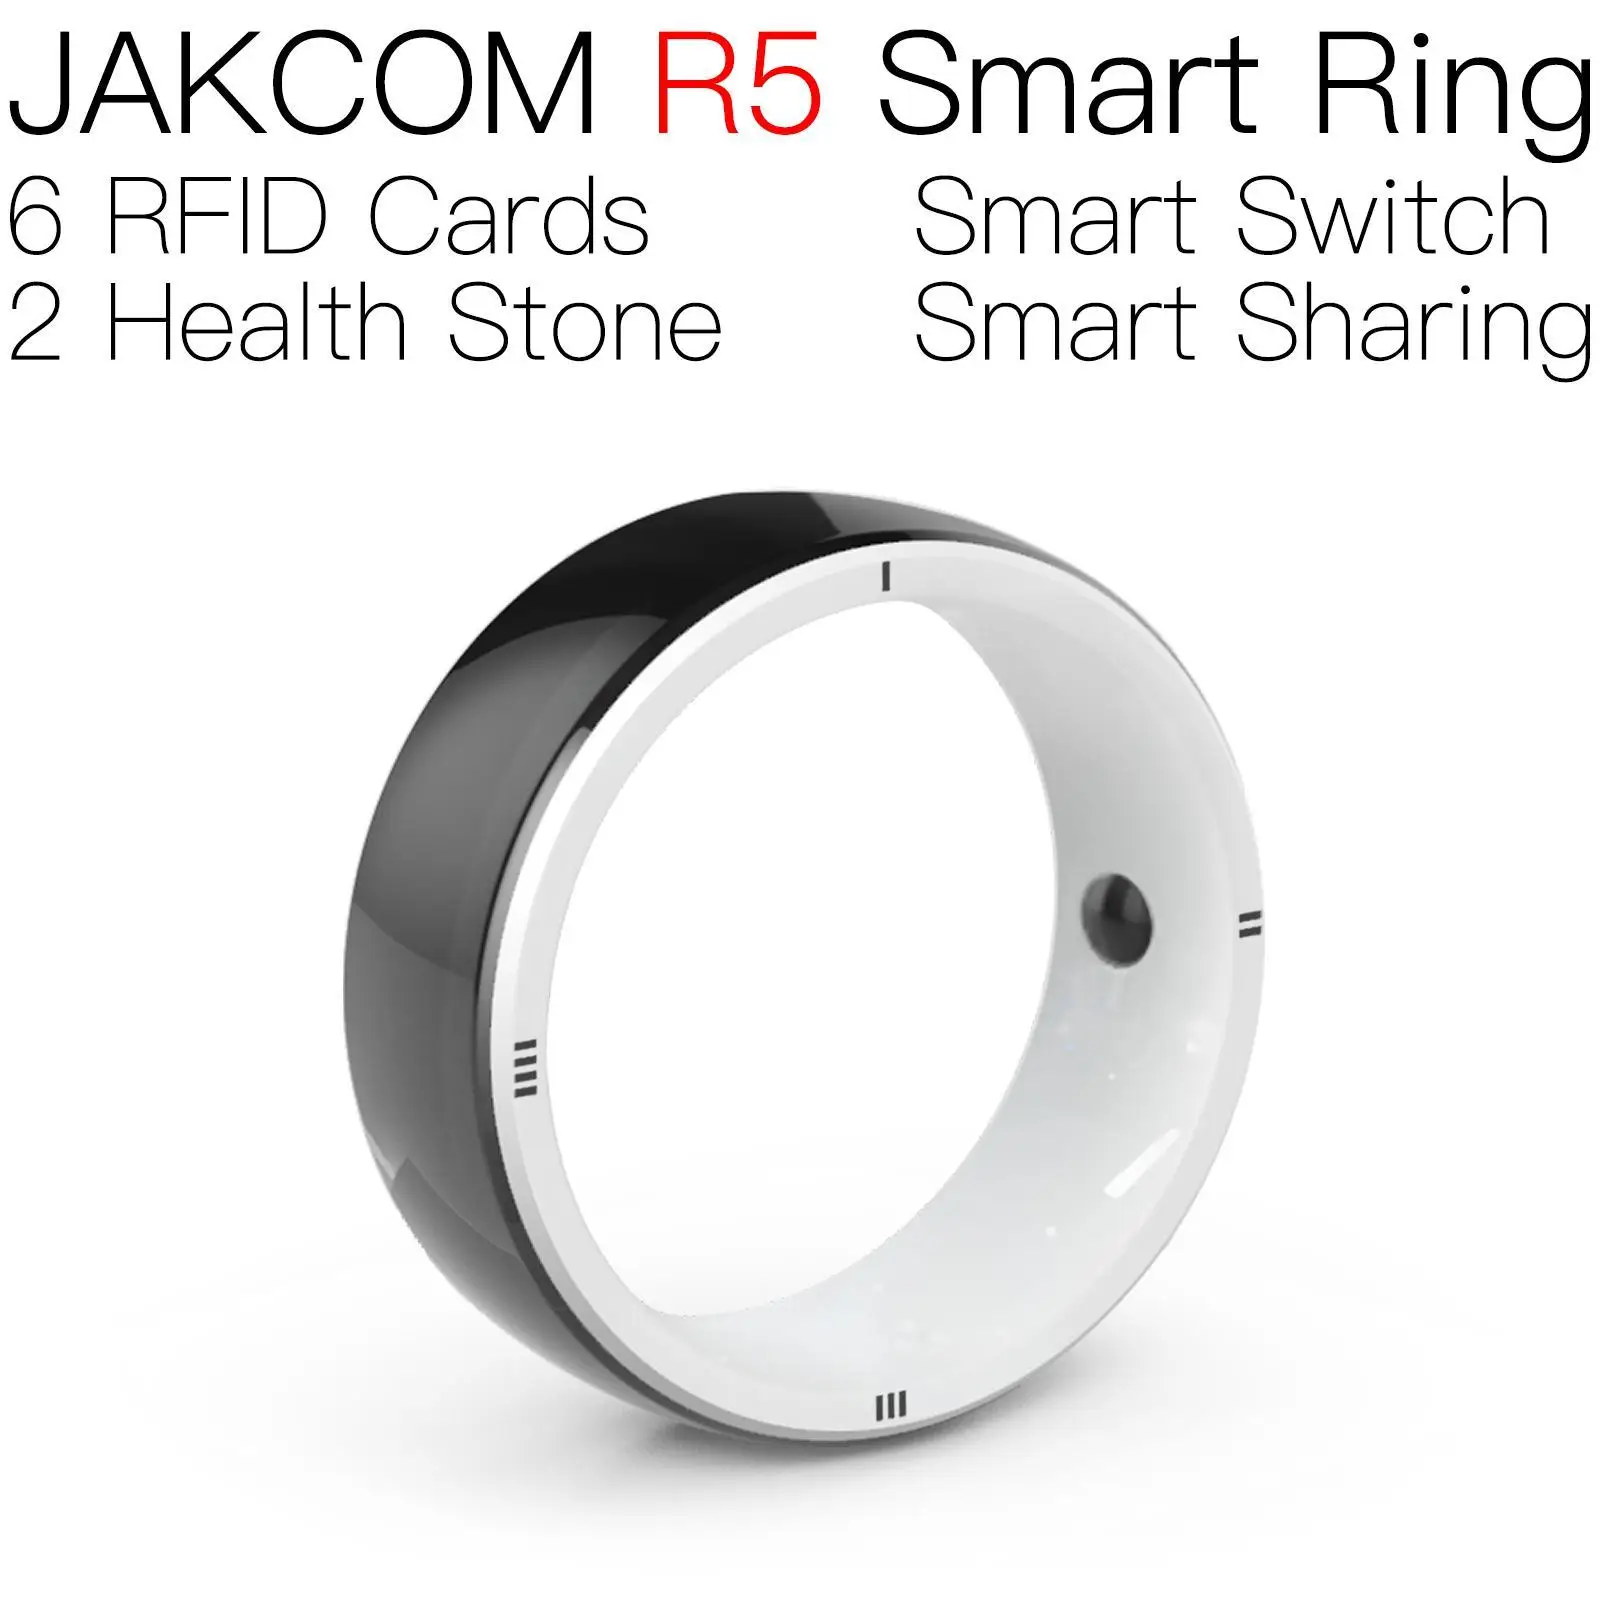 

JAKCOM R5 Smart Ring Newer than rfid business cards coil s50 patrol y61 tie smart yelan alipay em4100 card copy key tag uid